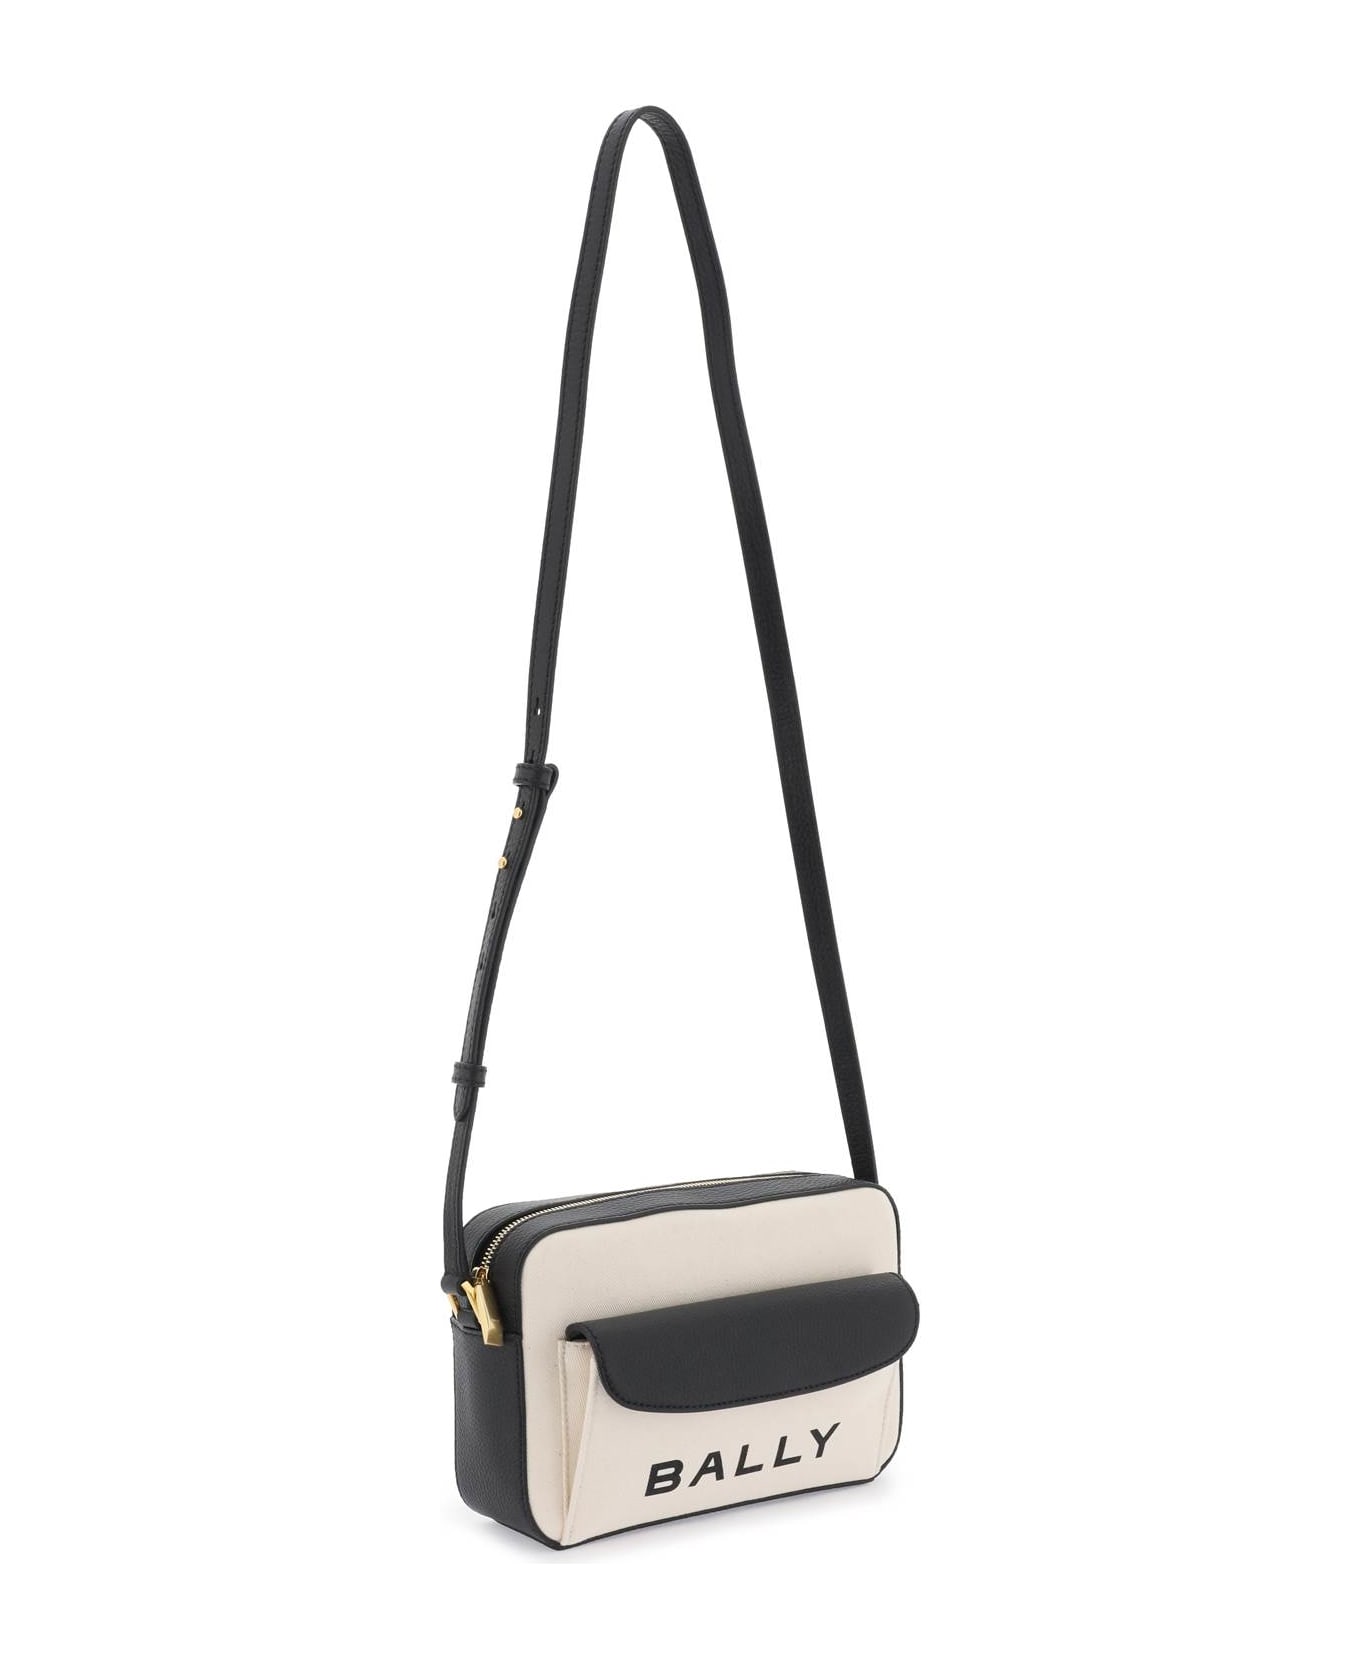 Bally 'bar' Crossbody Bag - NATURAL BLACK ORO (White)